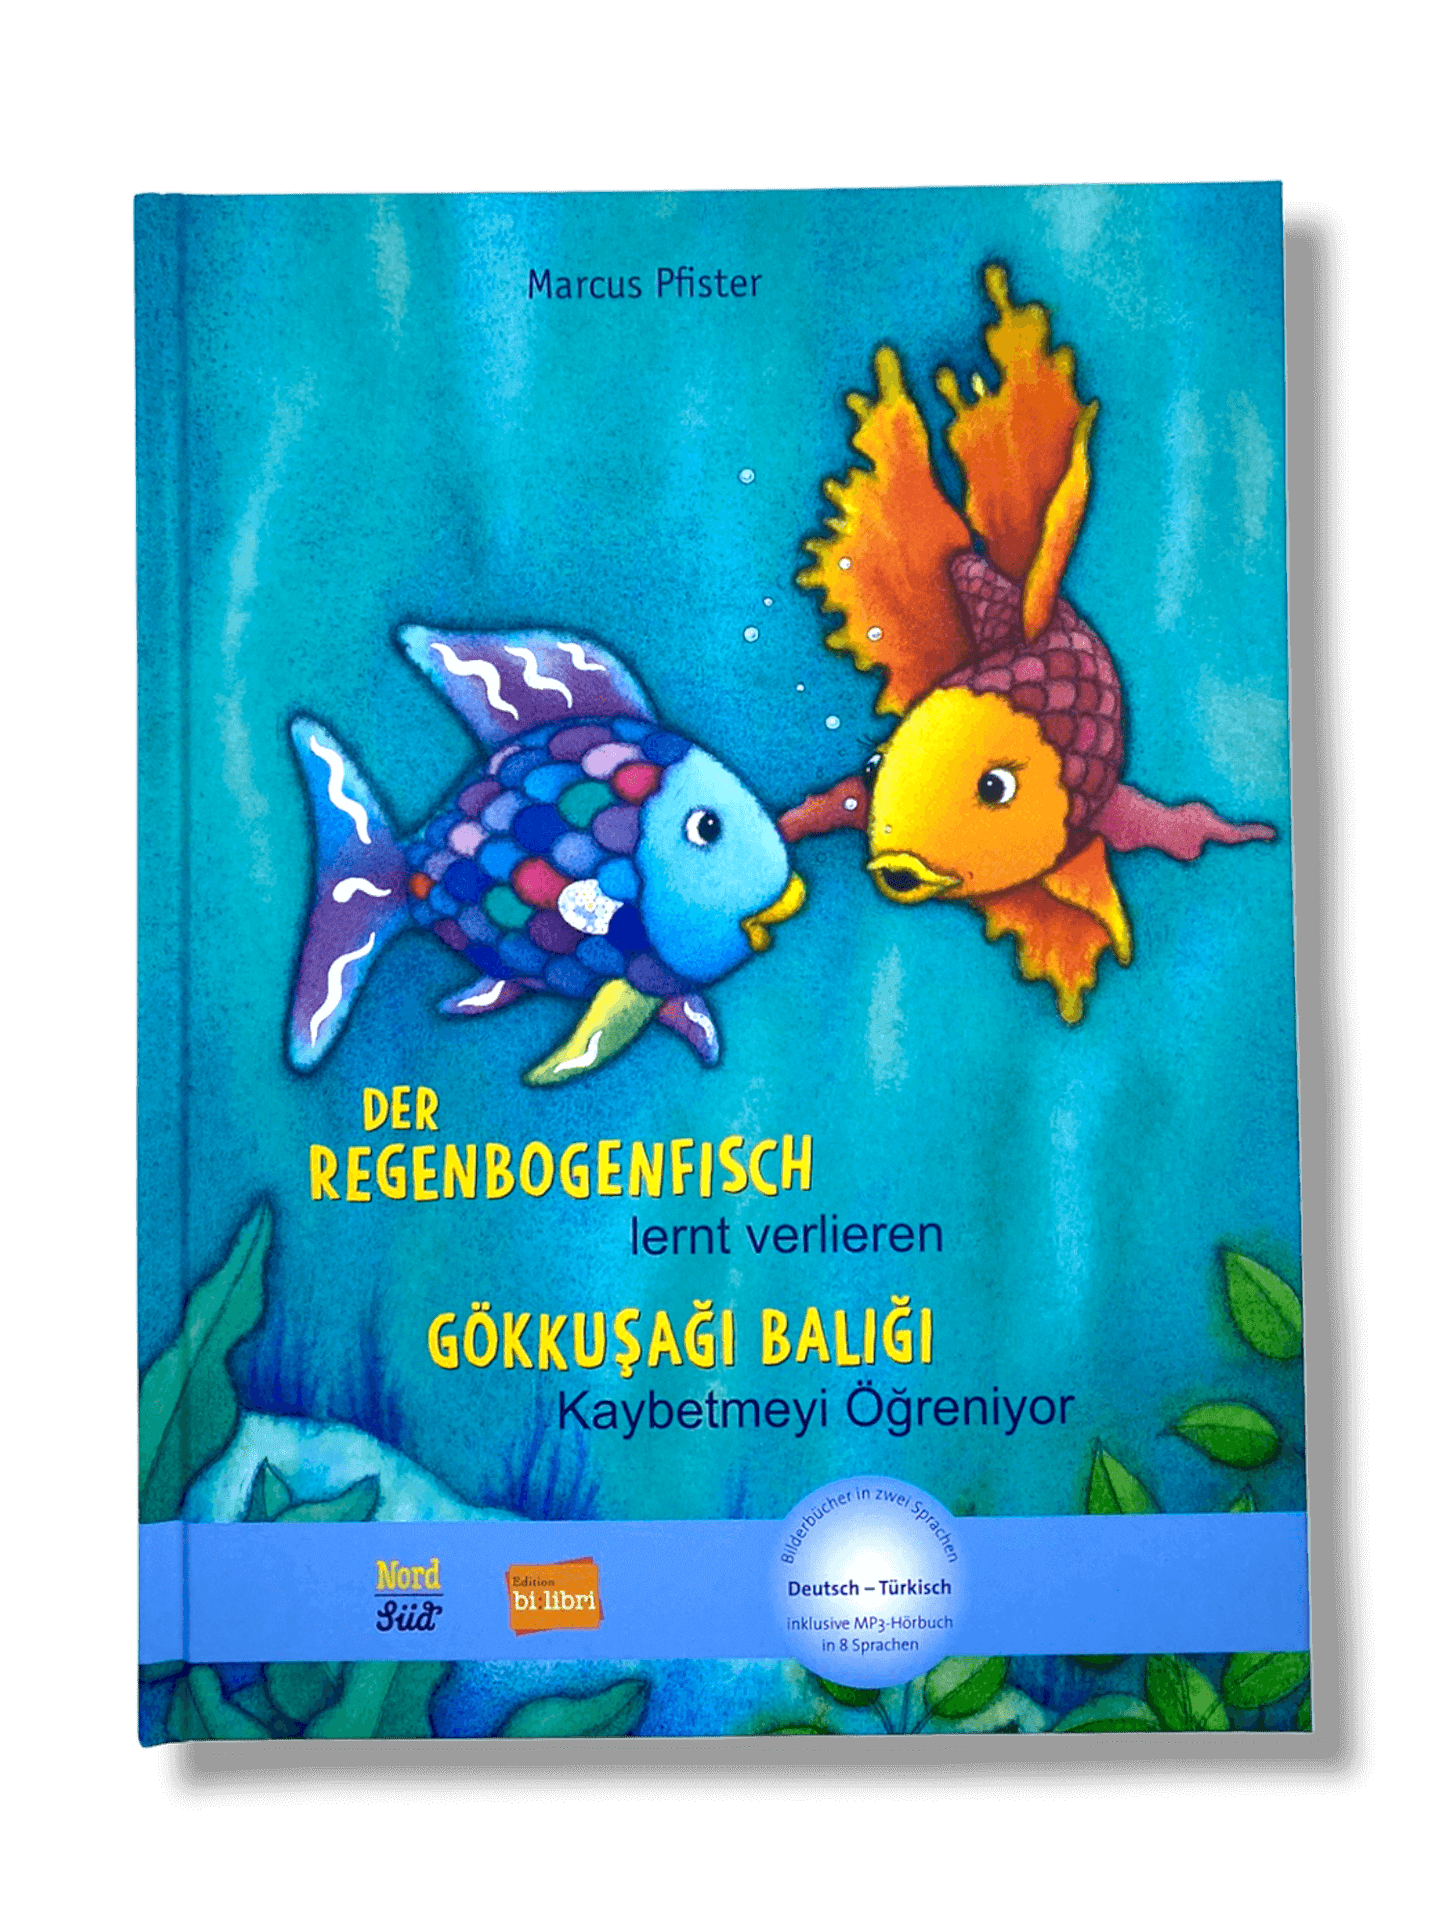 The rainbow fish learns to lose Turkish/German